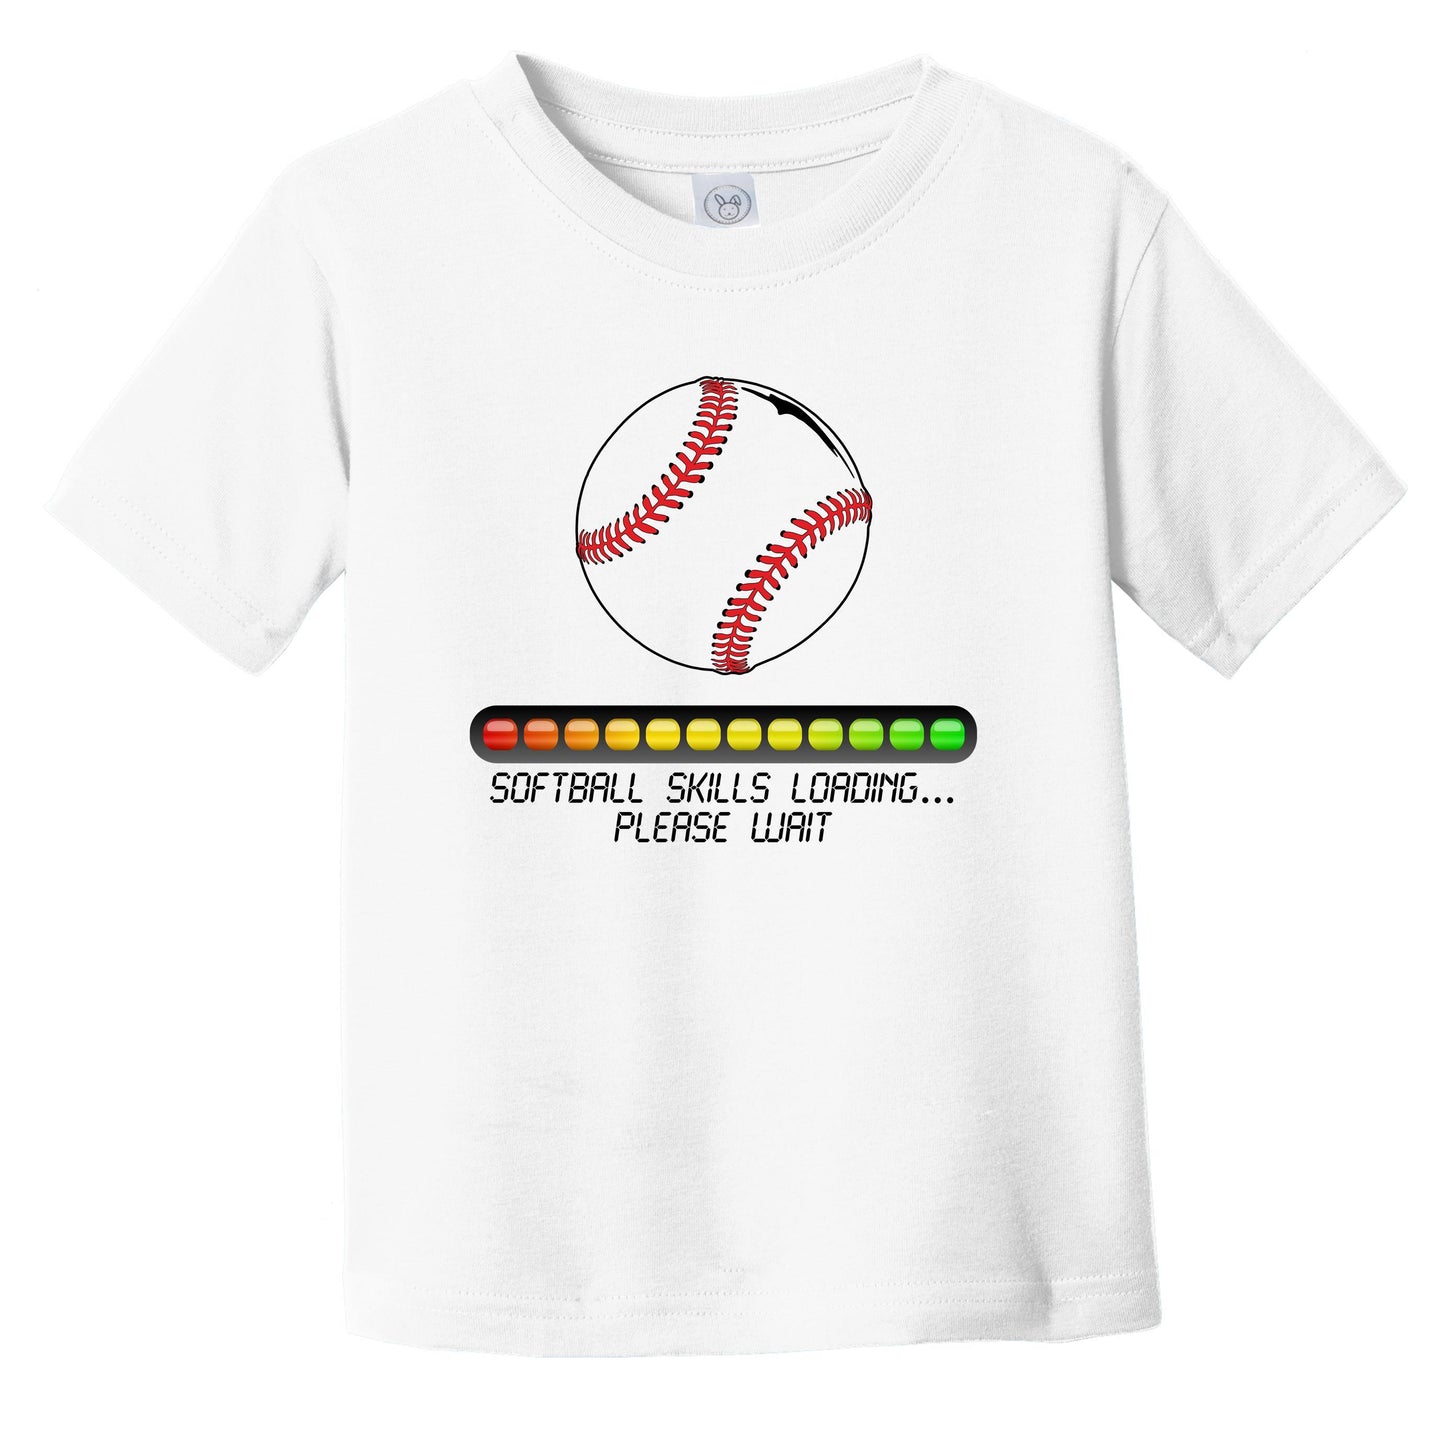 Softball Skills Loading Please Wait Funny Infant Toddler T-Shirt